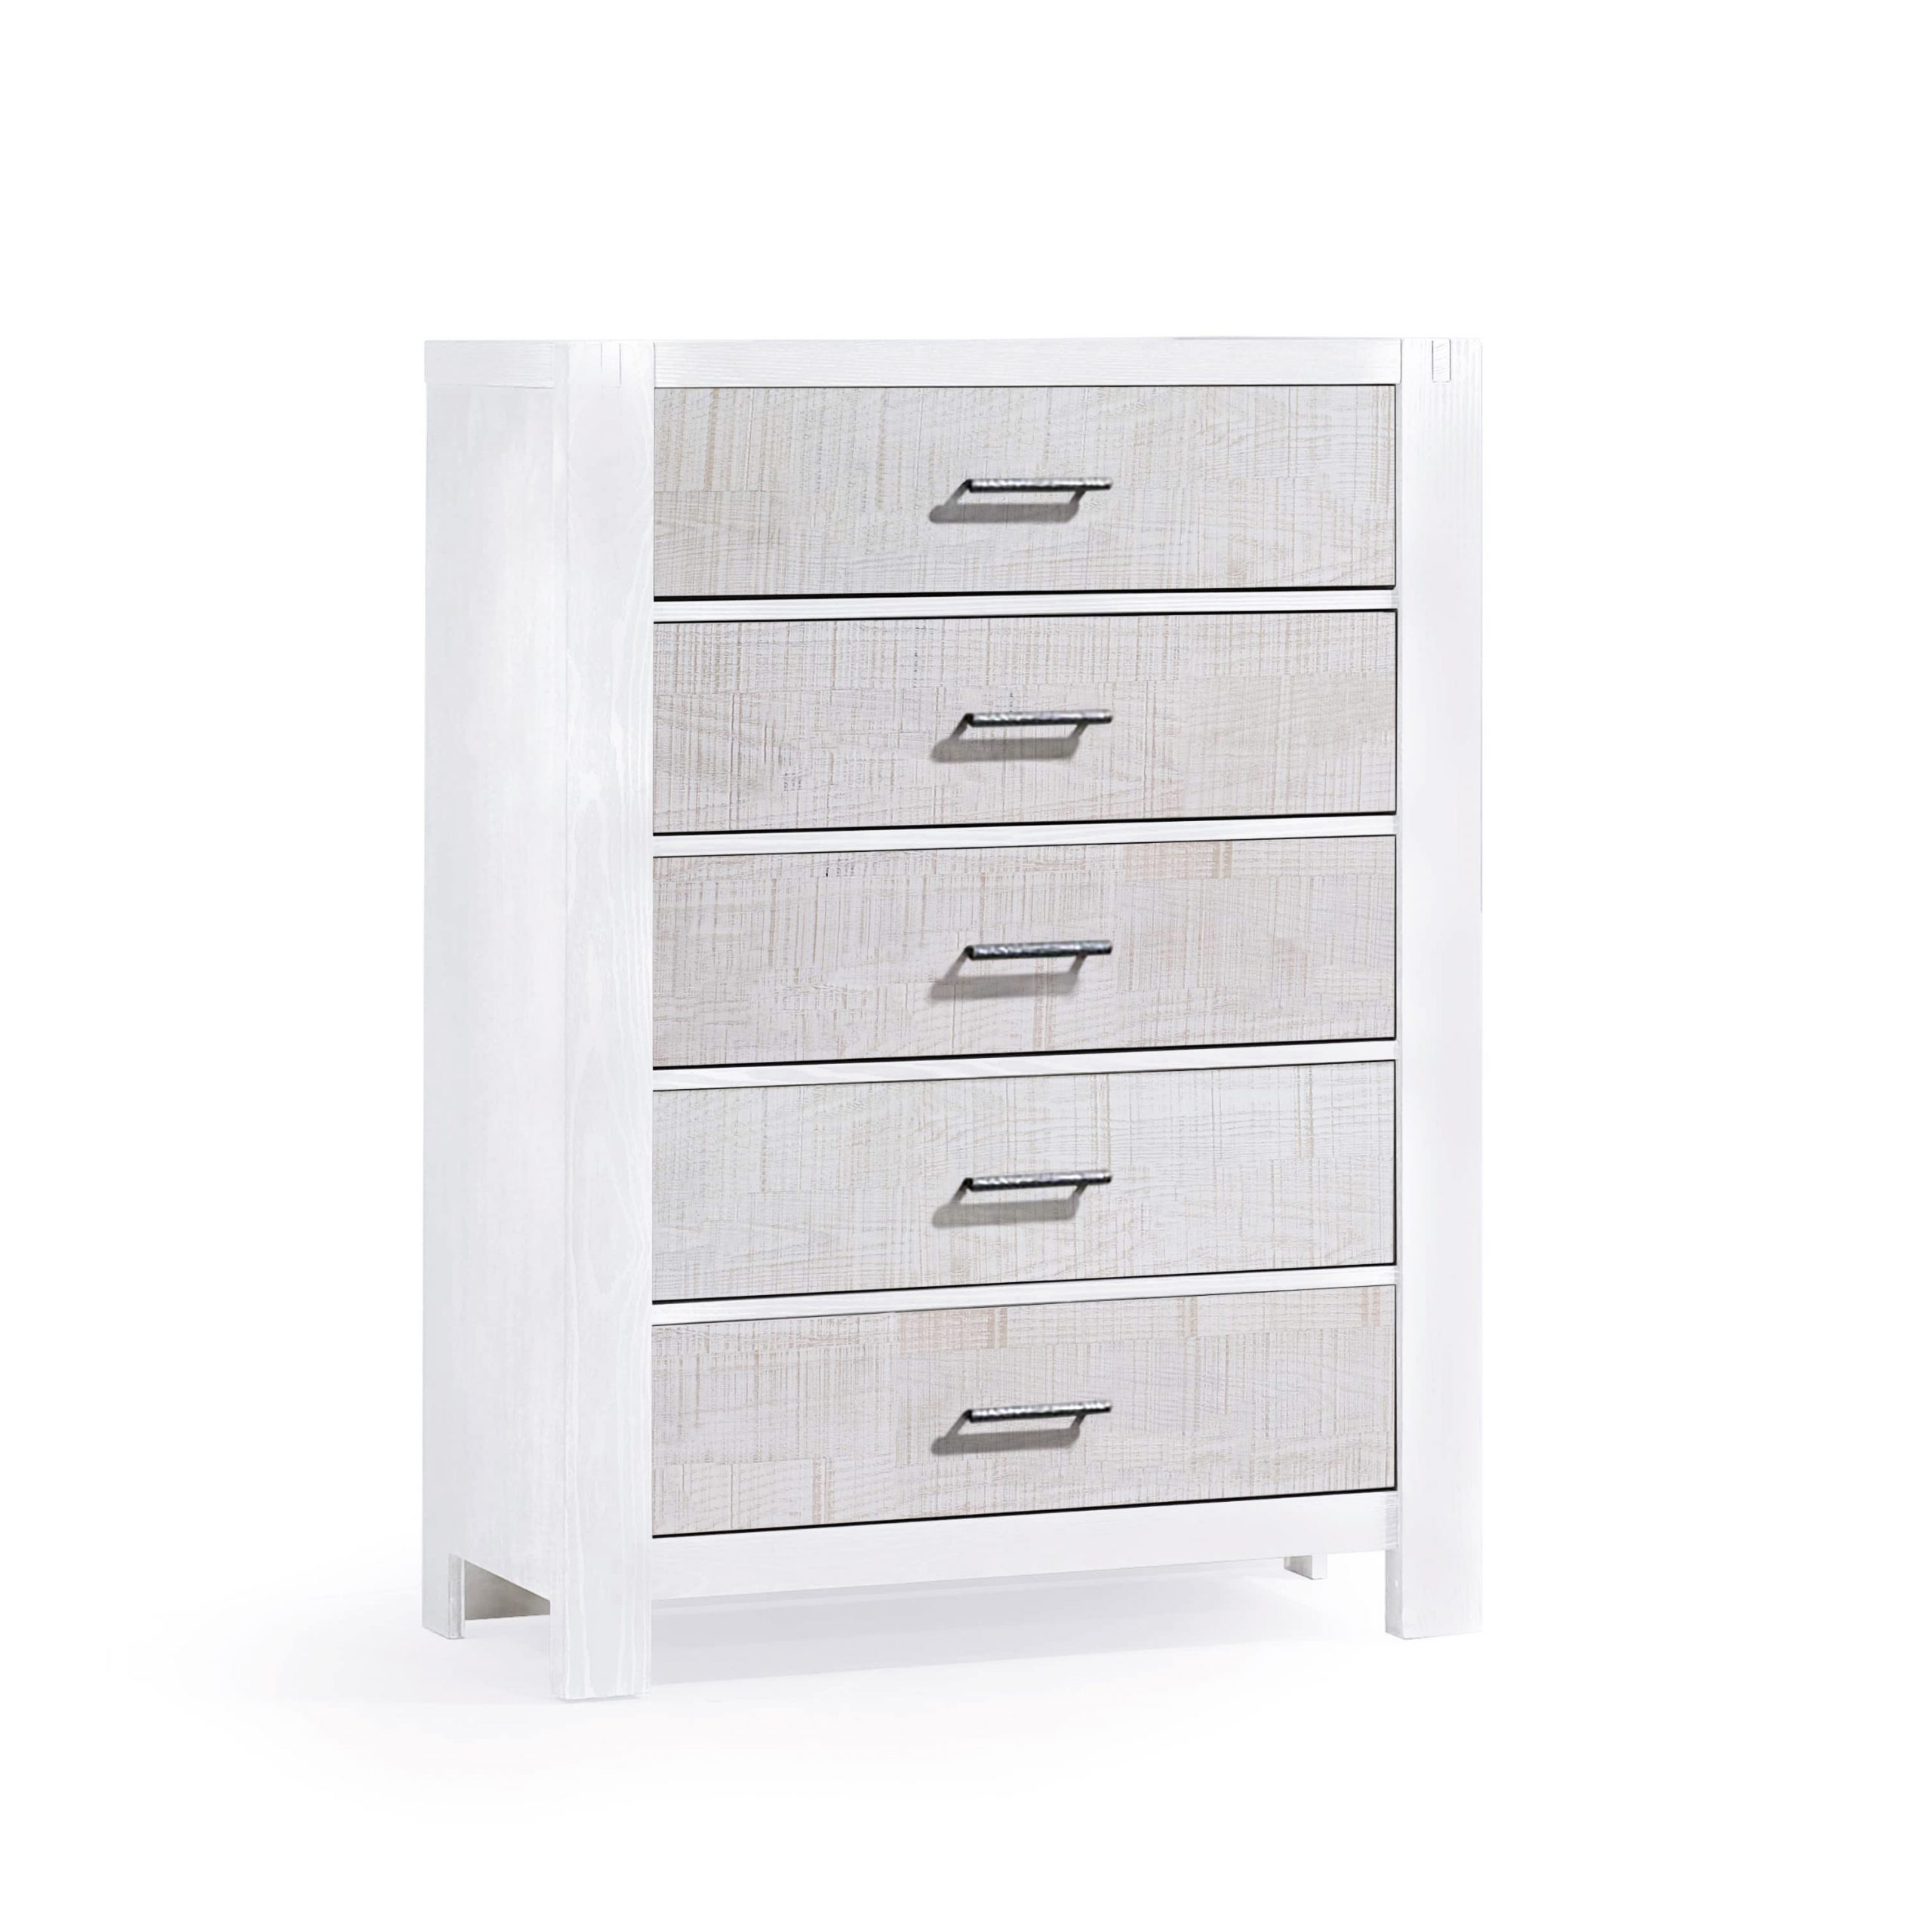 Rustico Moderno 5 Drawer Dresser in White and White Bark